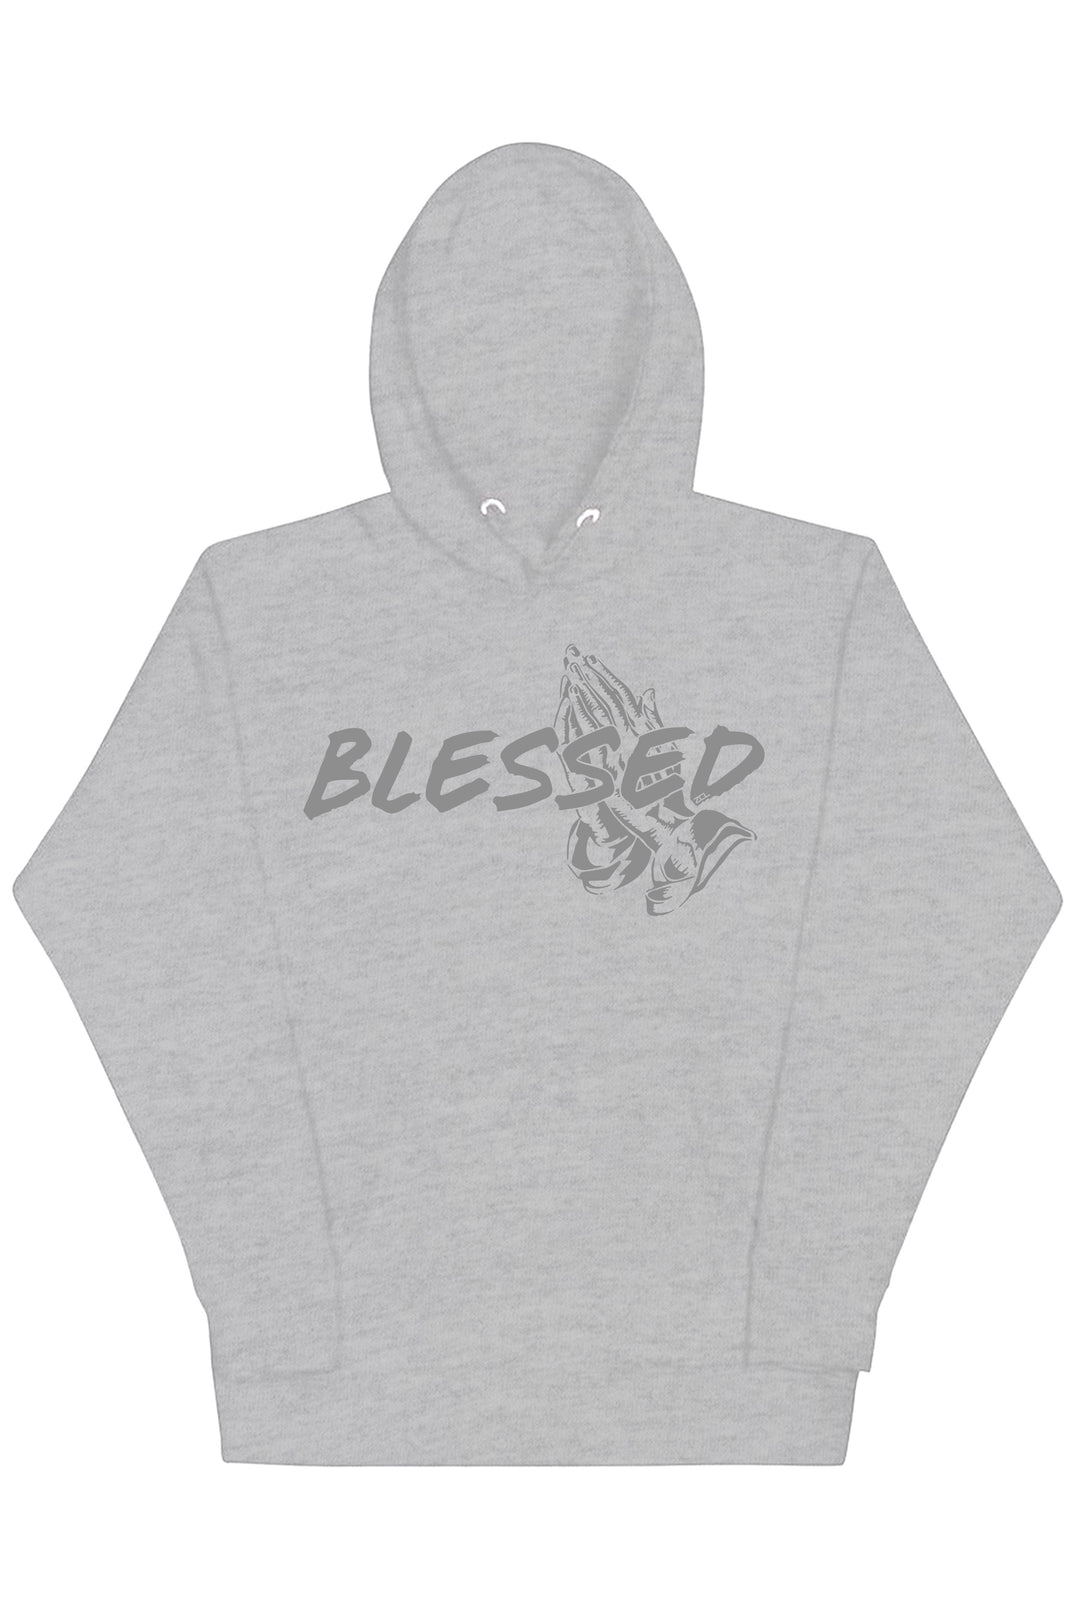 Blessed Hoodie (Grey Logo) - Zamage